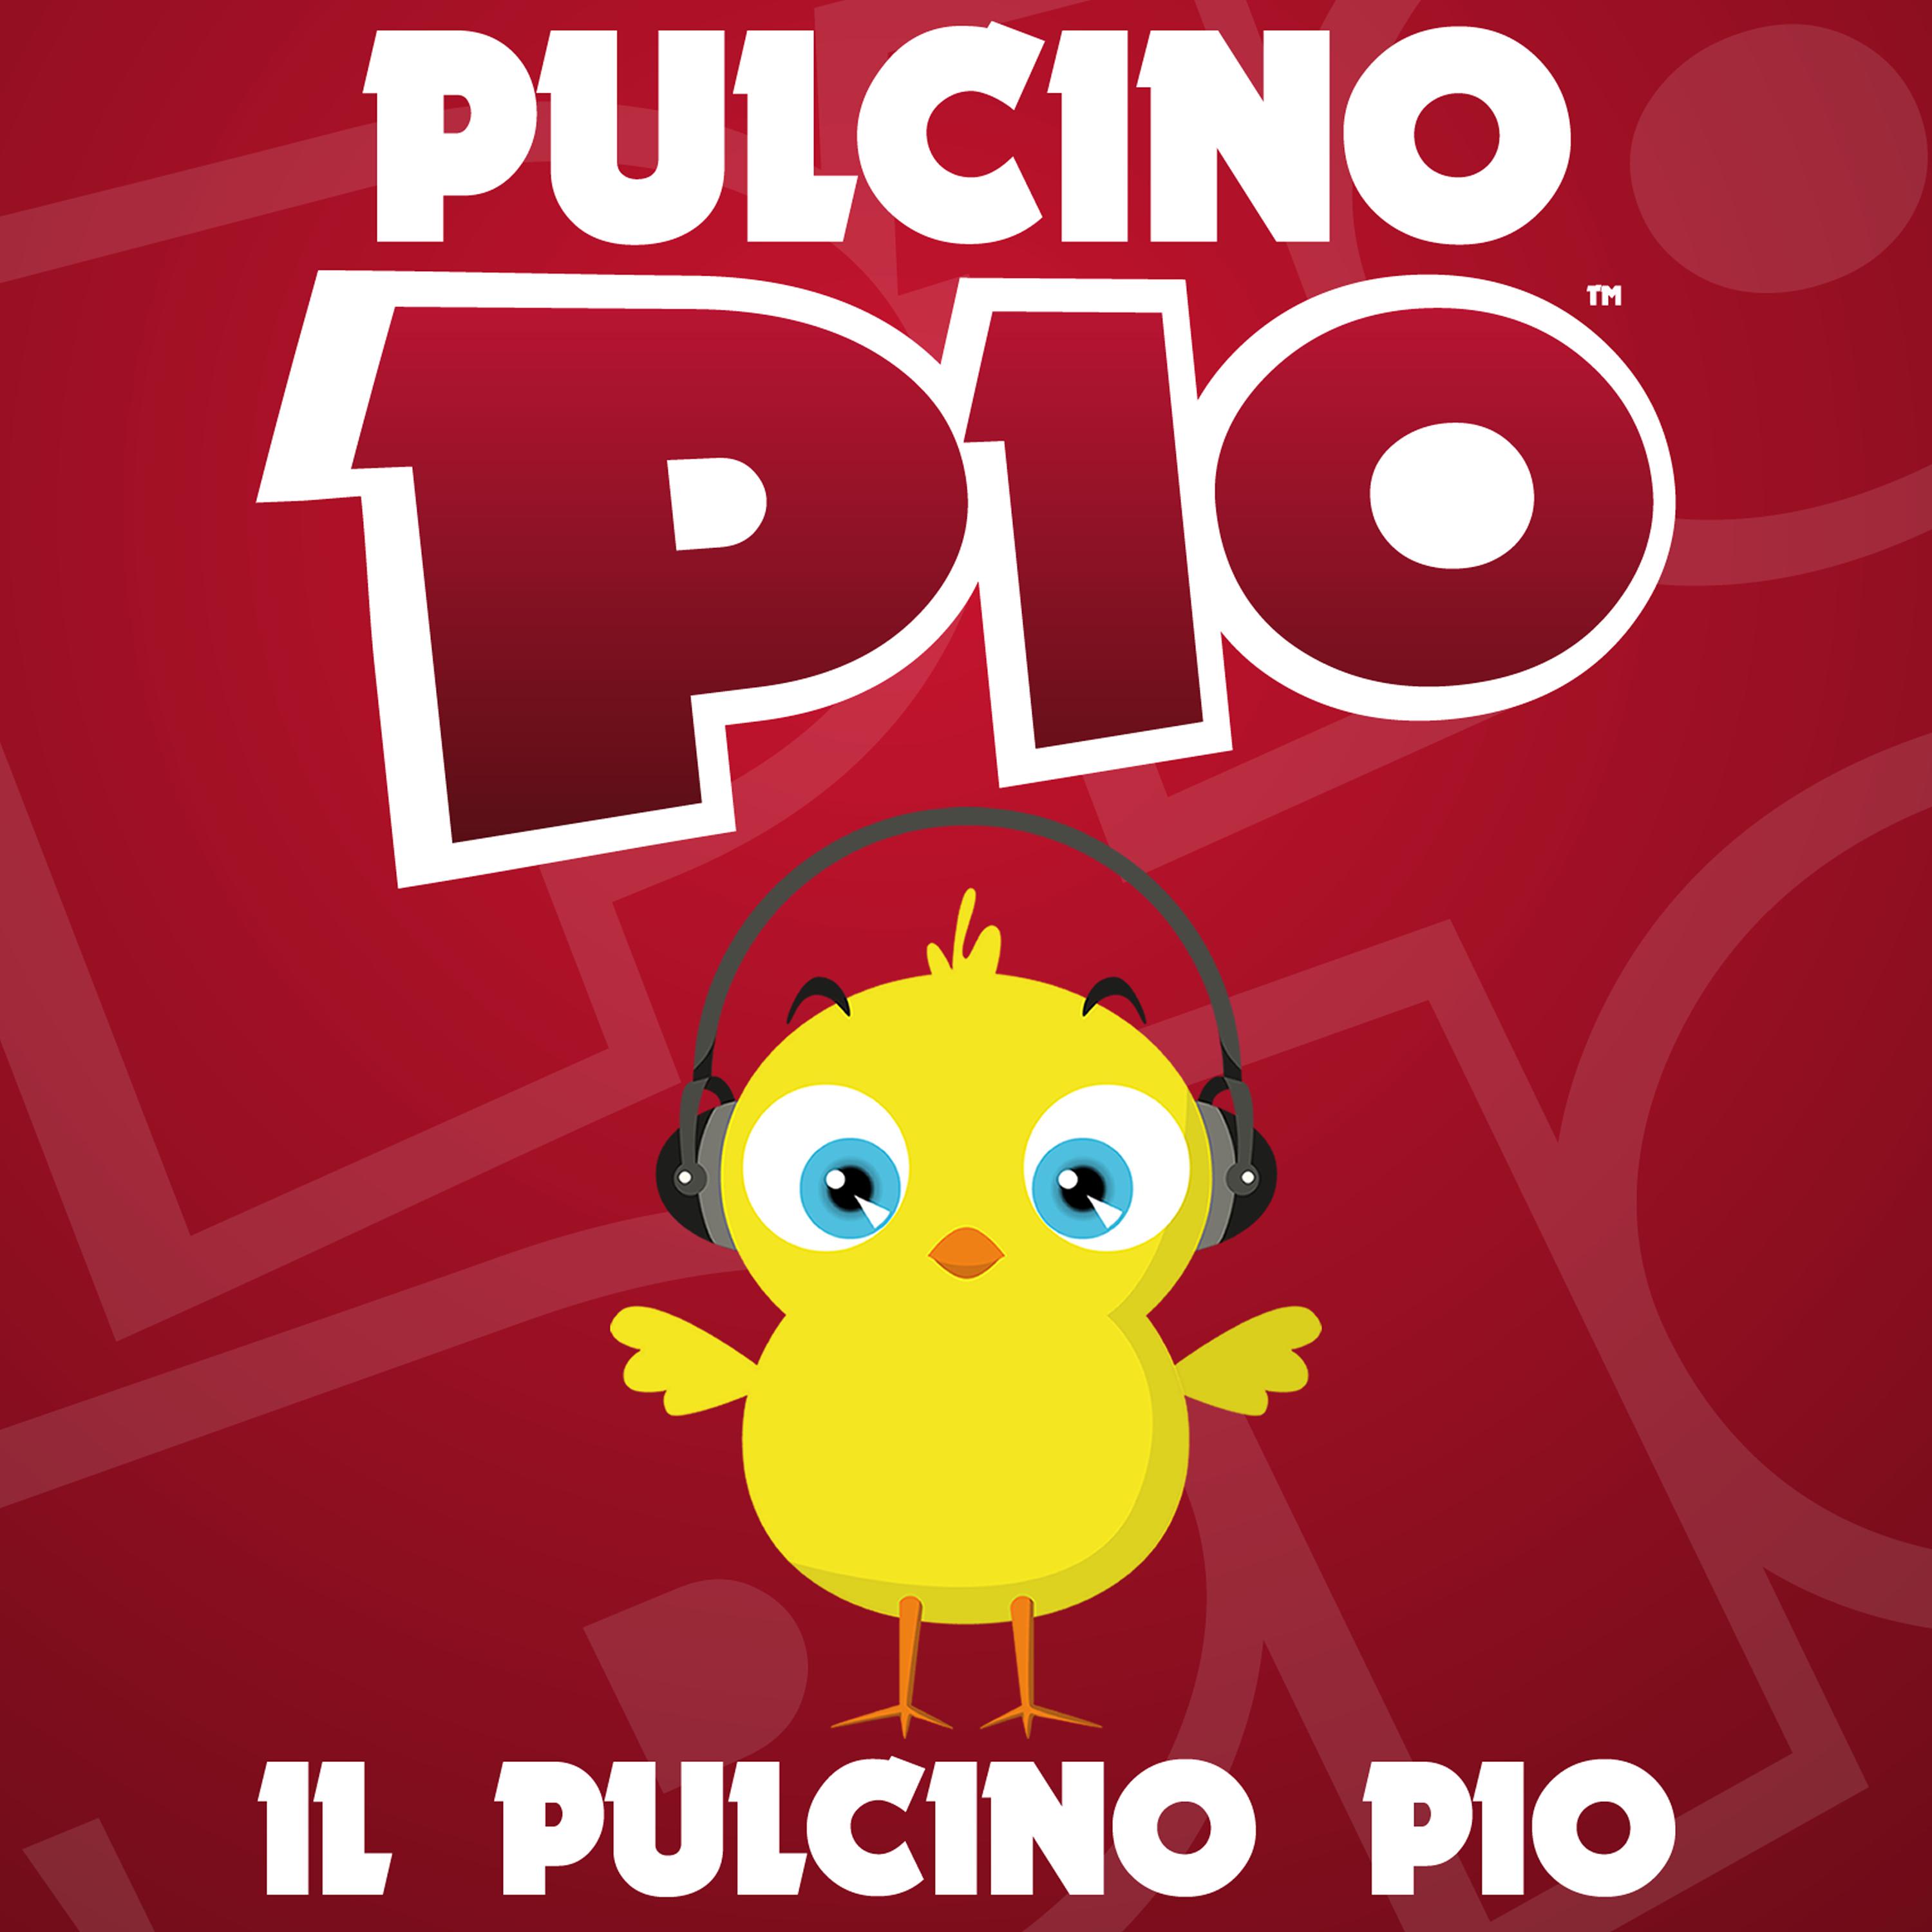 Песни у нас живет цыпленок. Цыплёнок Pio. Пульчино Пио. Цыпленок пучино Пио. Pulcino Pio the little chick cheep.